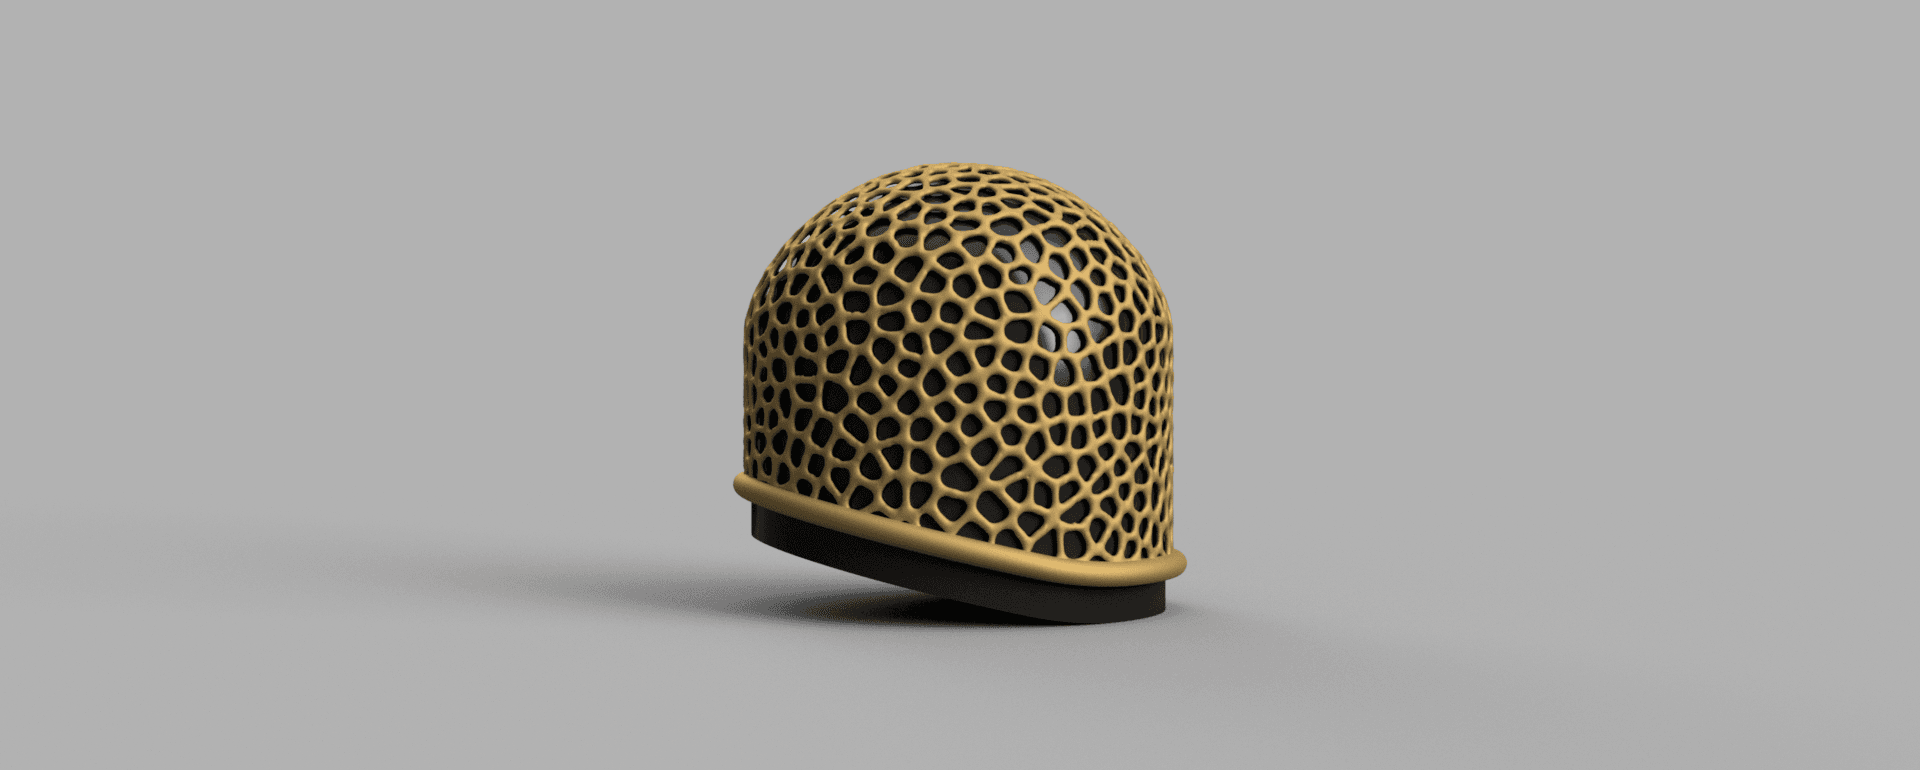 Voroni Helmet.obj 3d model